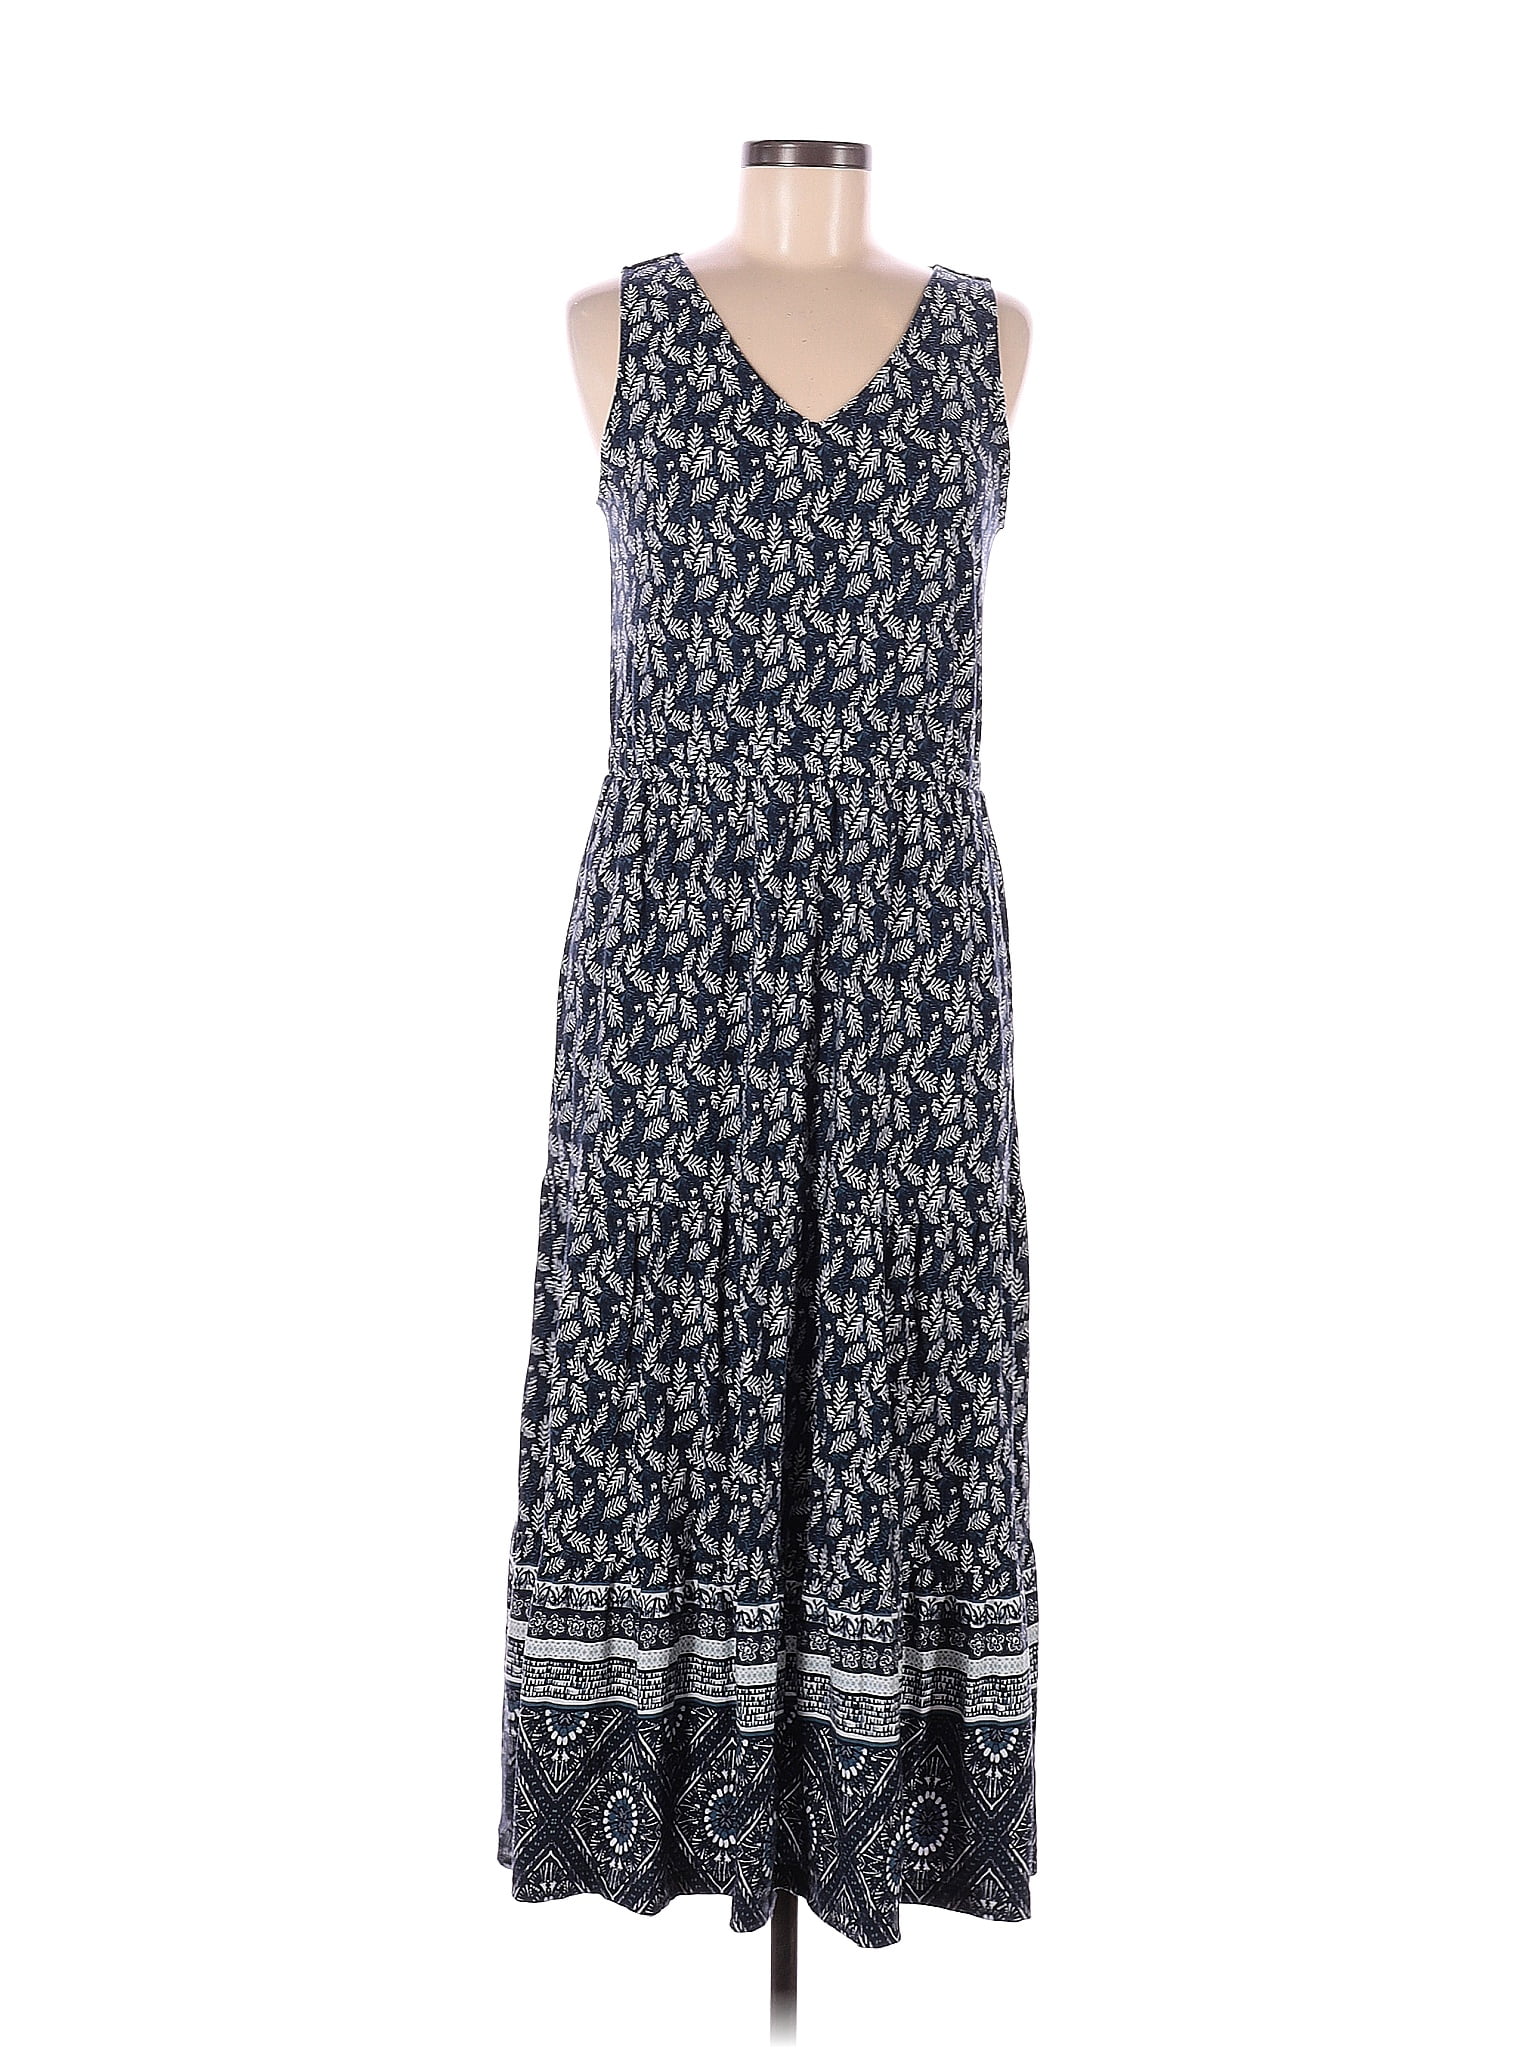 Garnet Hill Multi Color Blue Casual Dress Size M - 75% off | thredUP